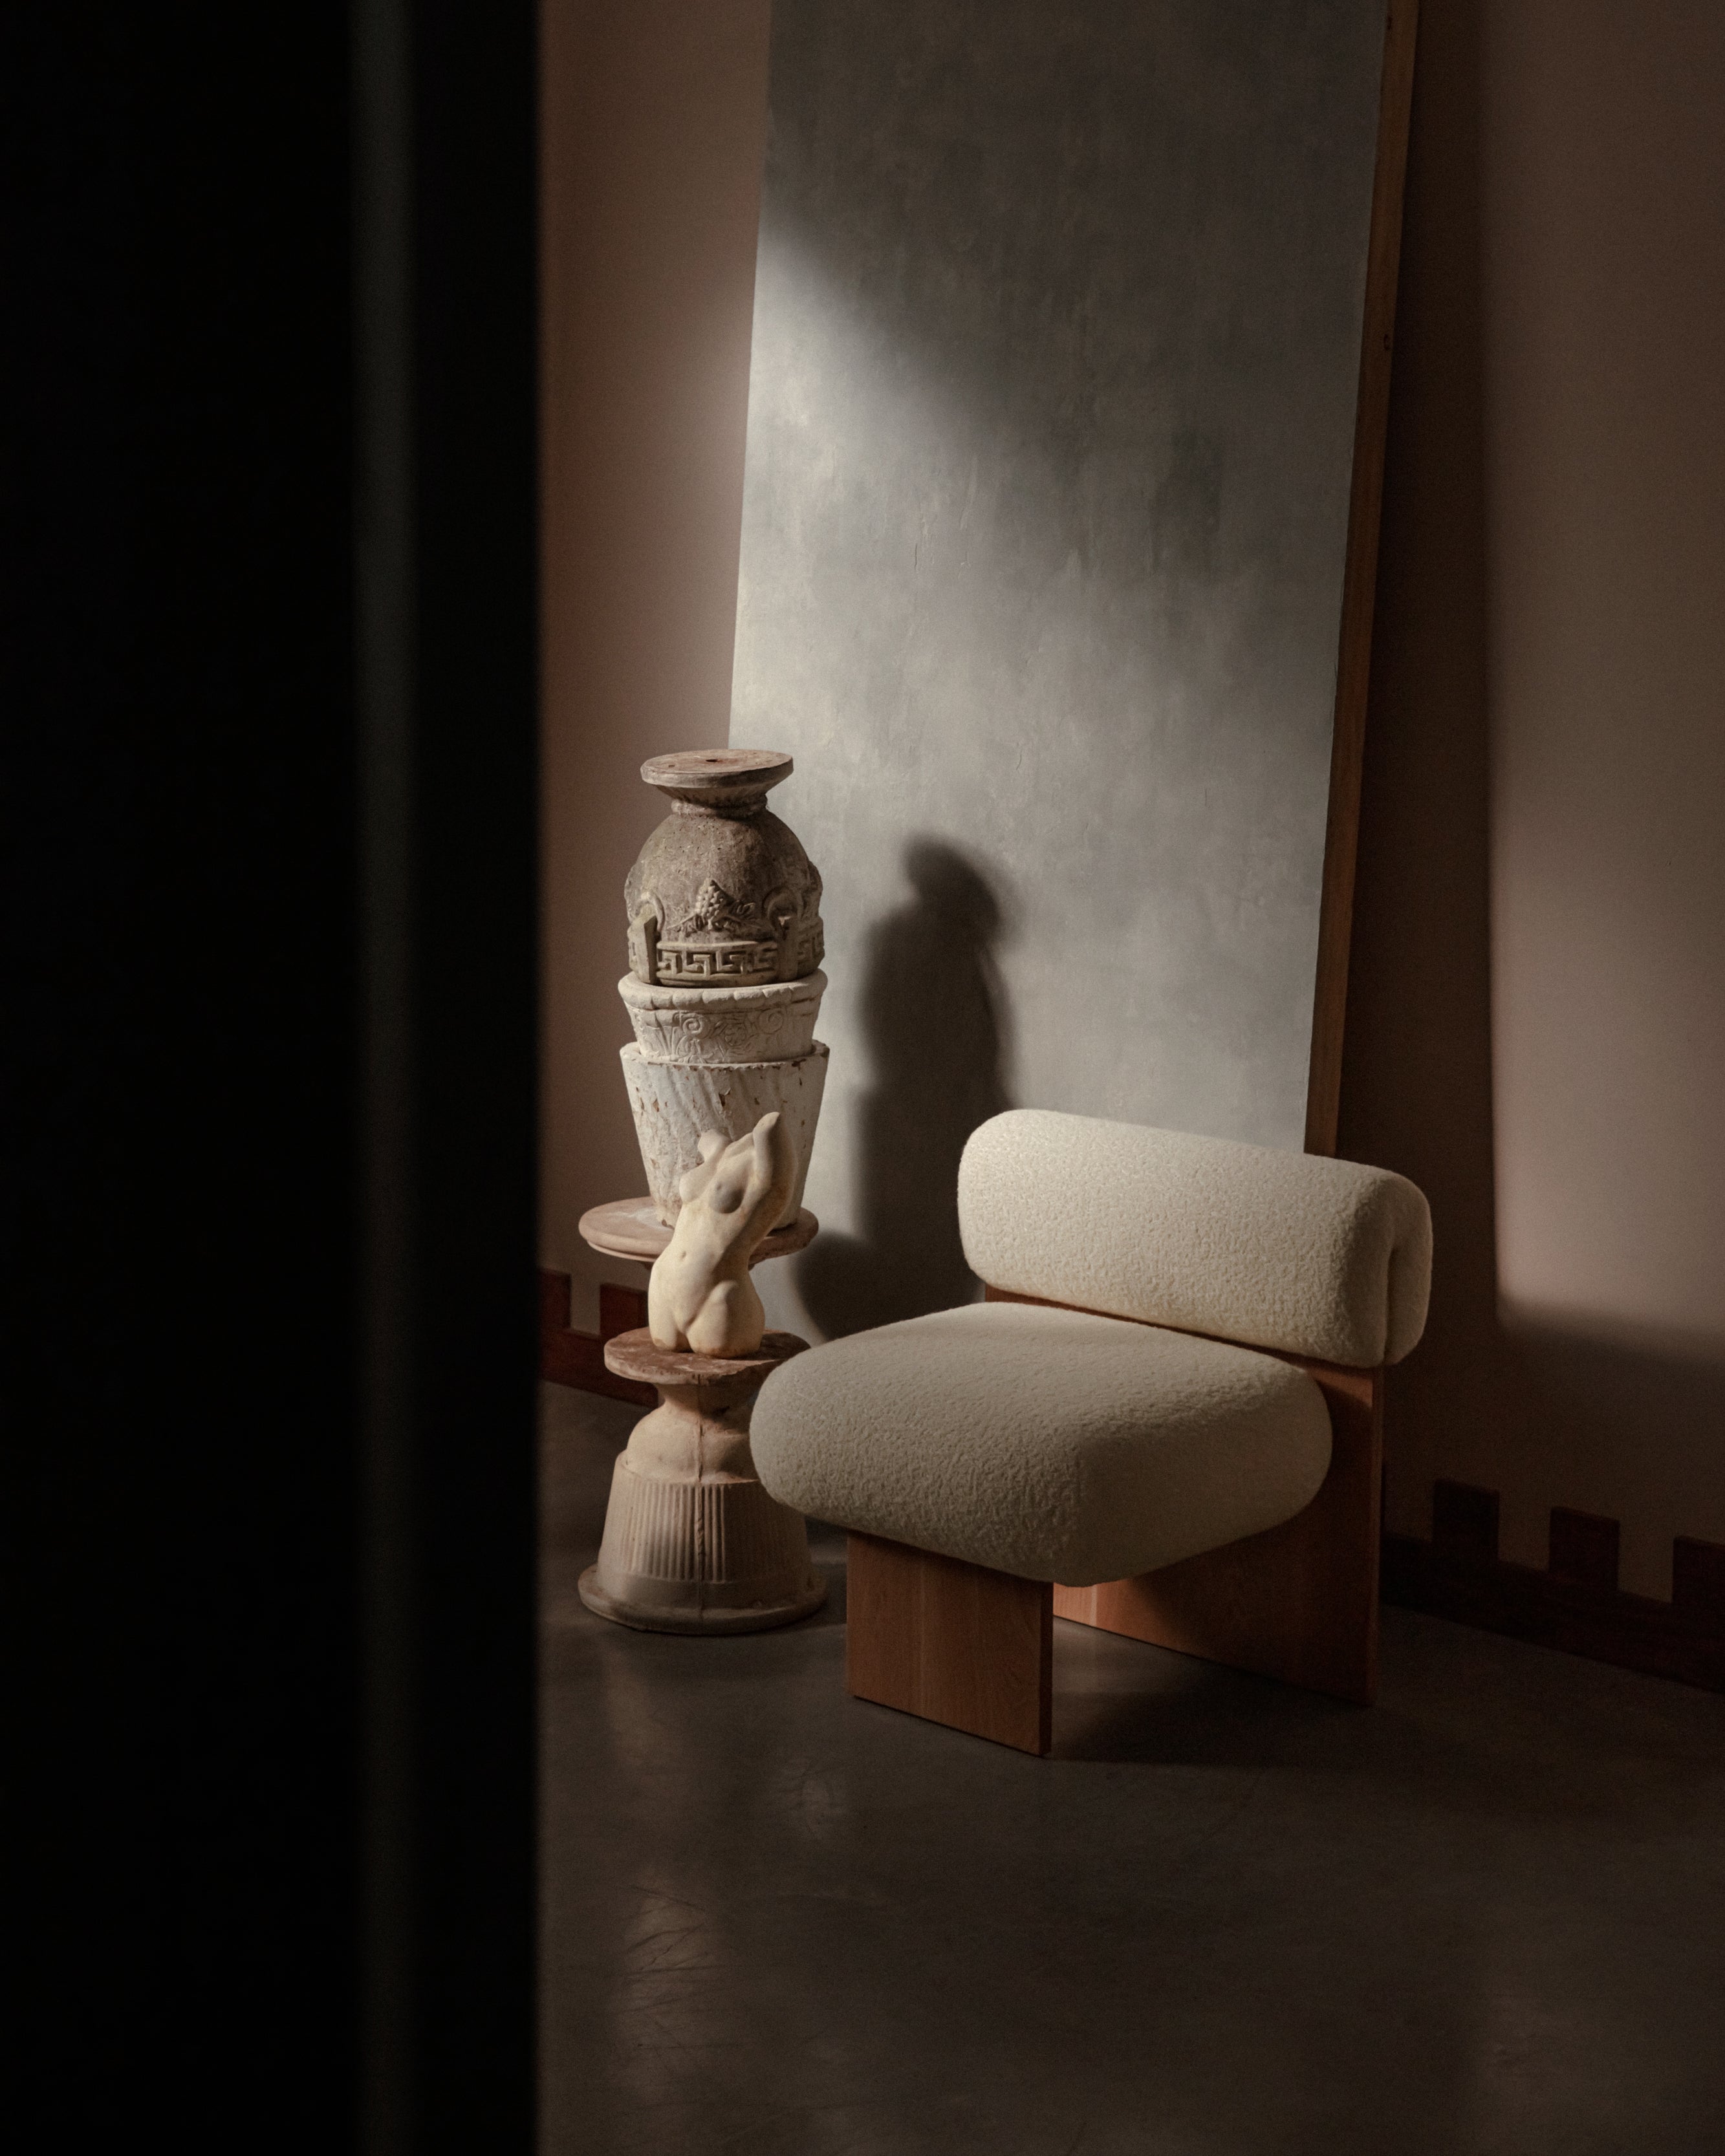 L'Art de Vivre Lounge Chair- Bouclè